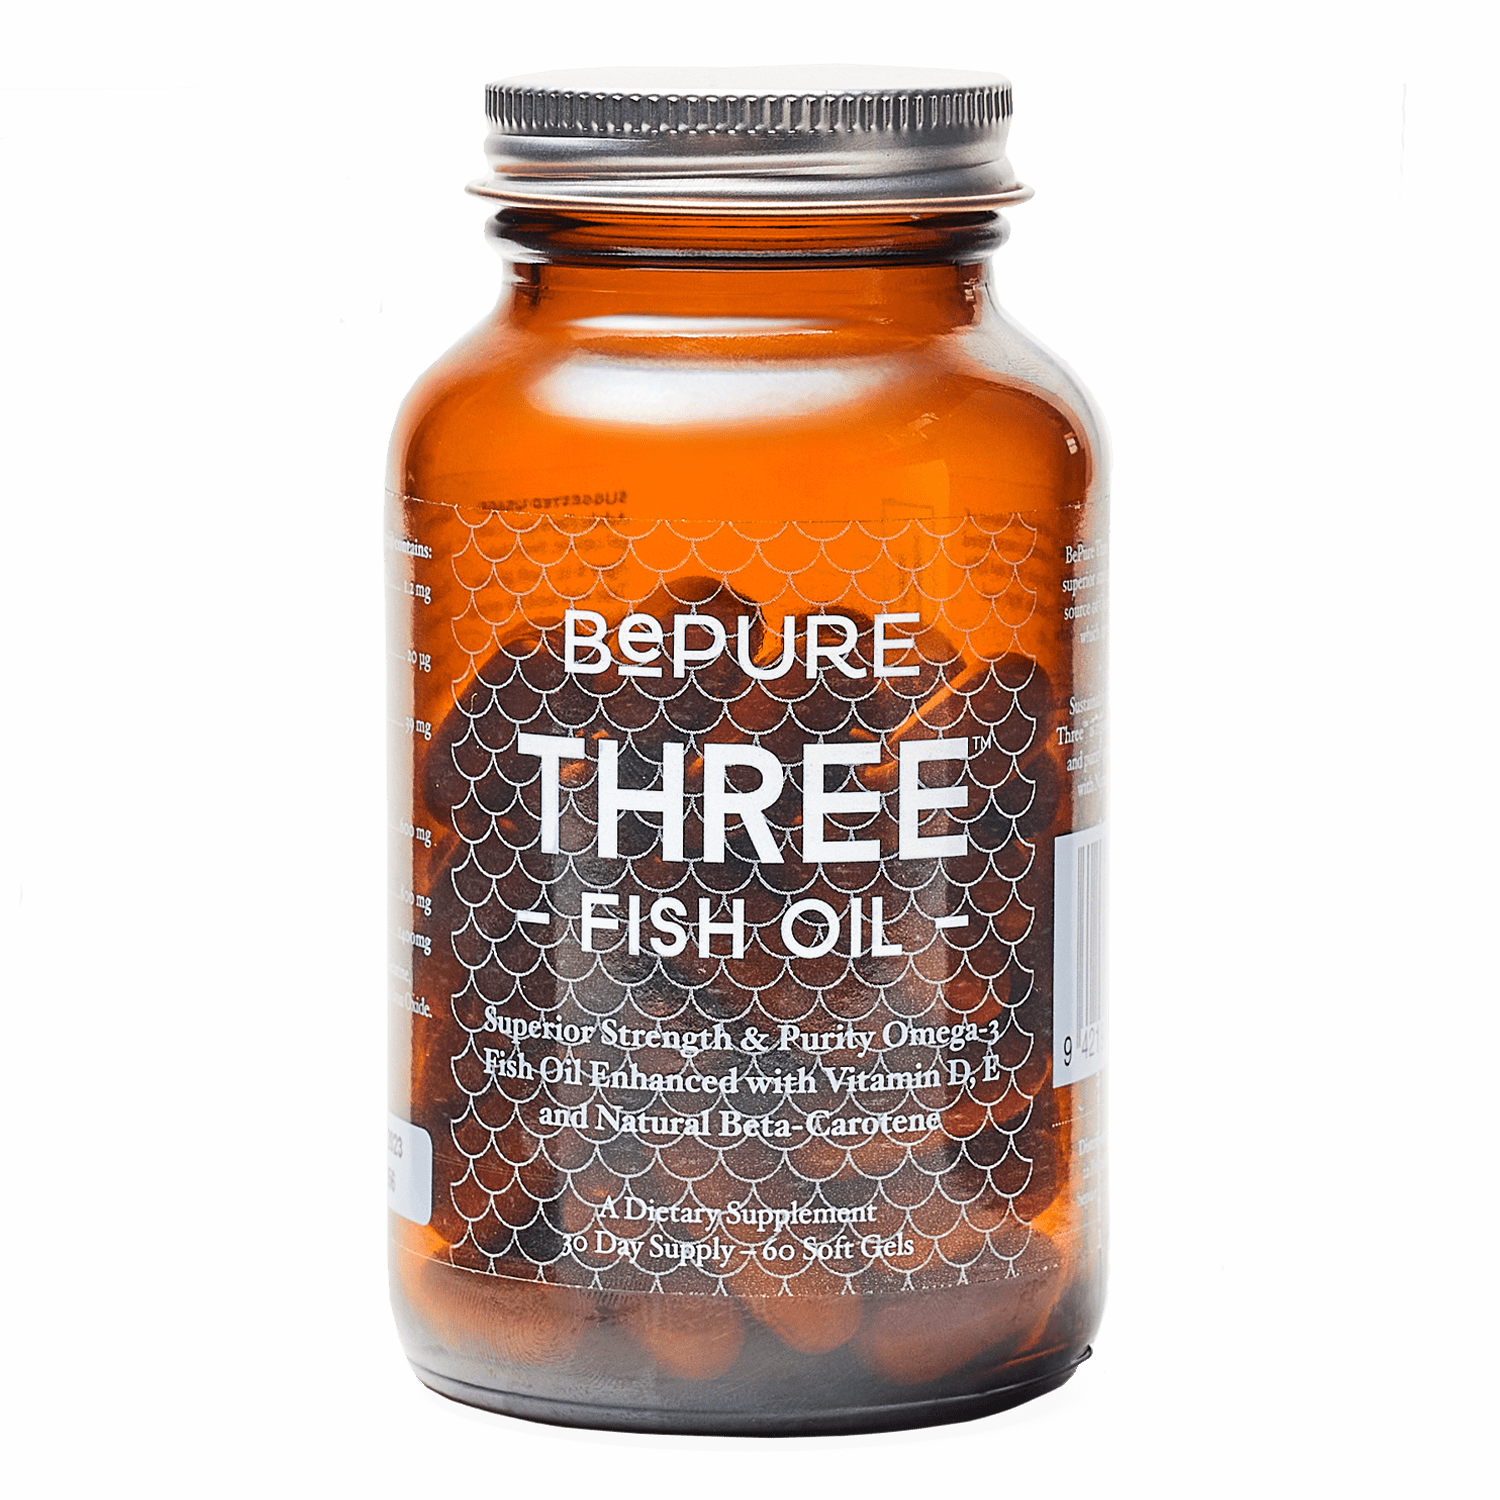 BePure Three Fish Oil - Tea & Tonic Matakana - BePure